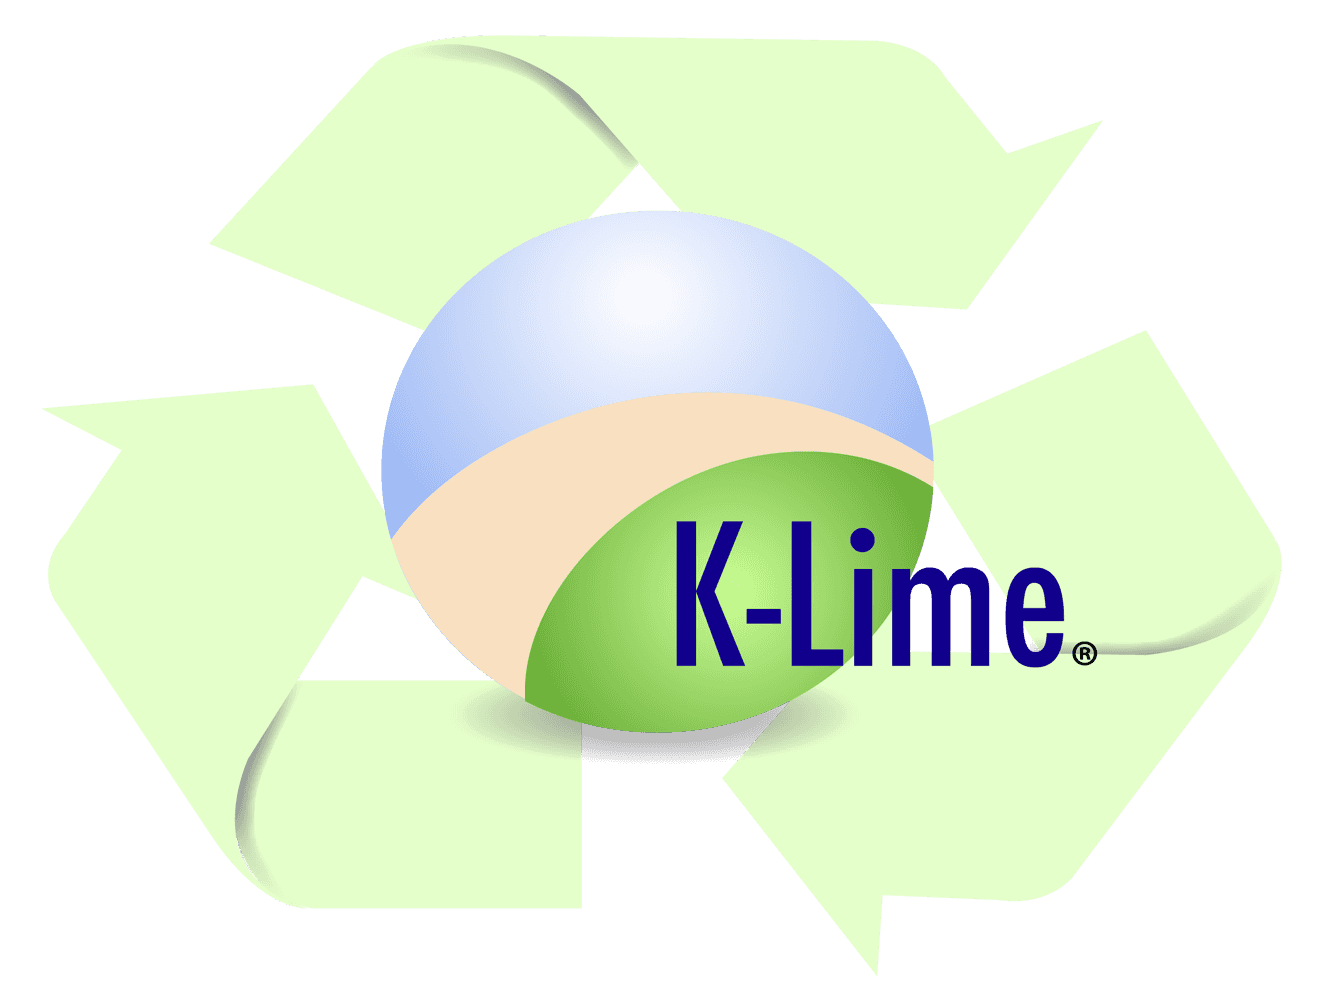 K-Lime